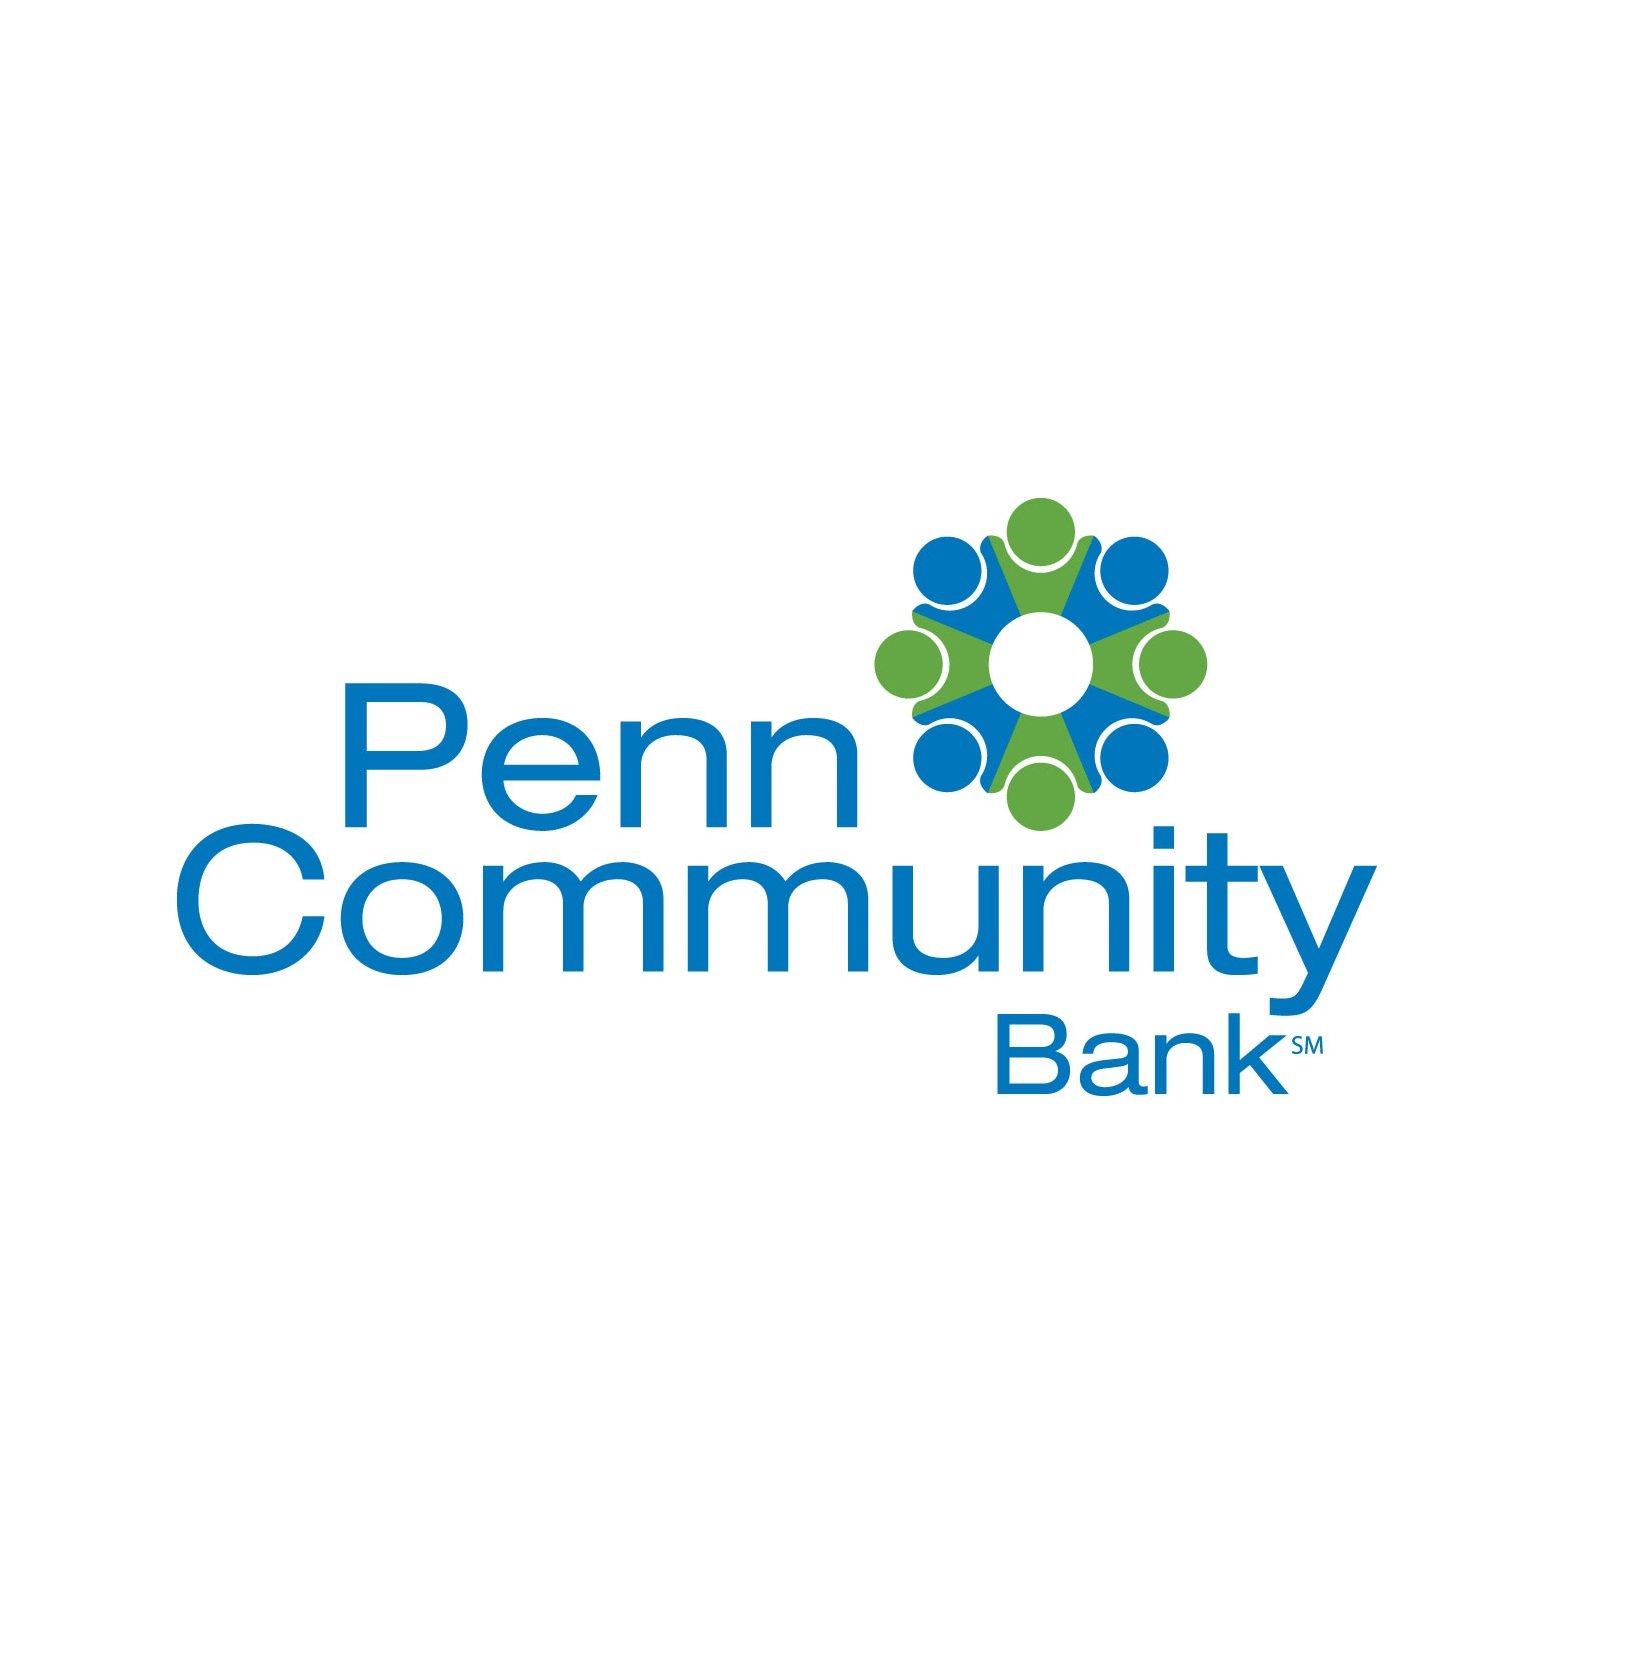 Penn Community Bank logo.jpg